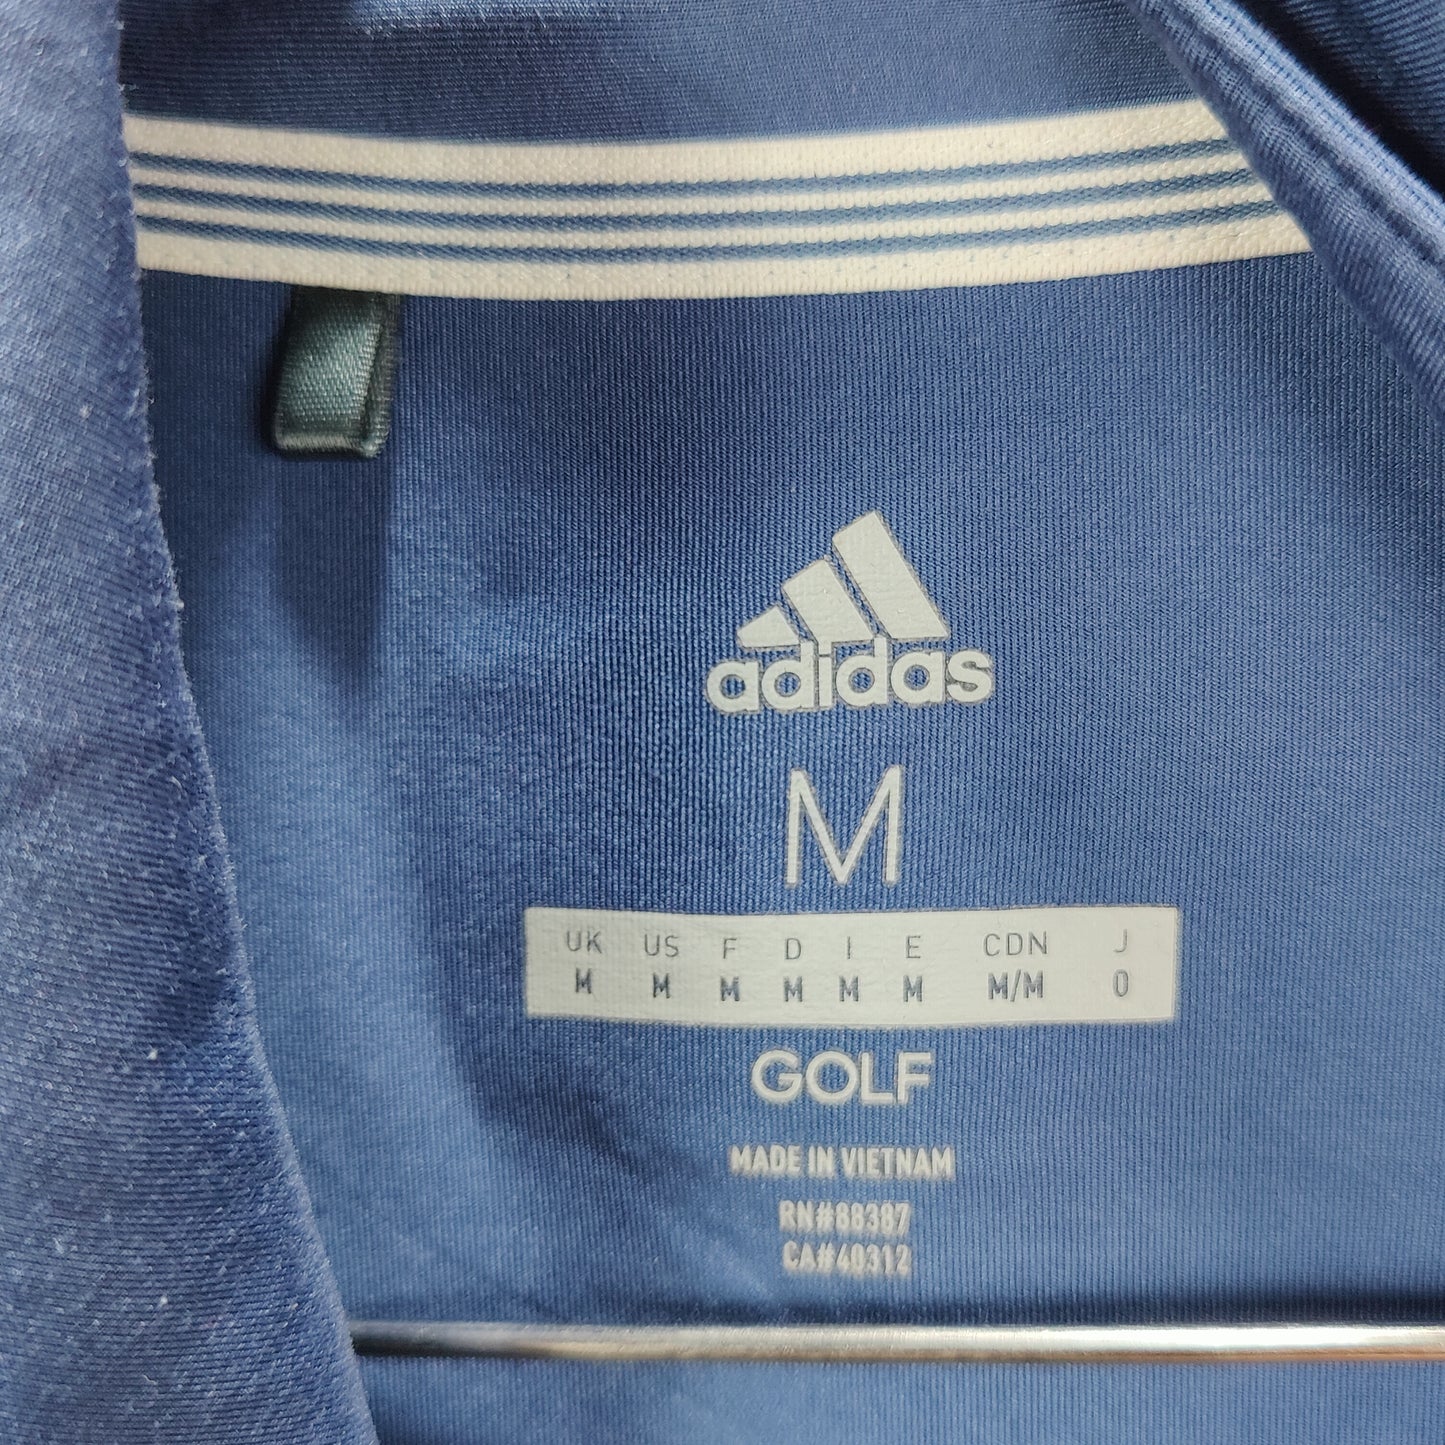 Adidas Golf Polo - Blue - TS1057